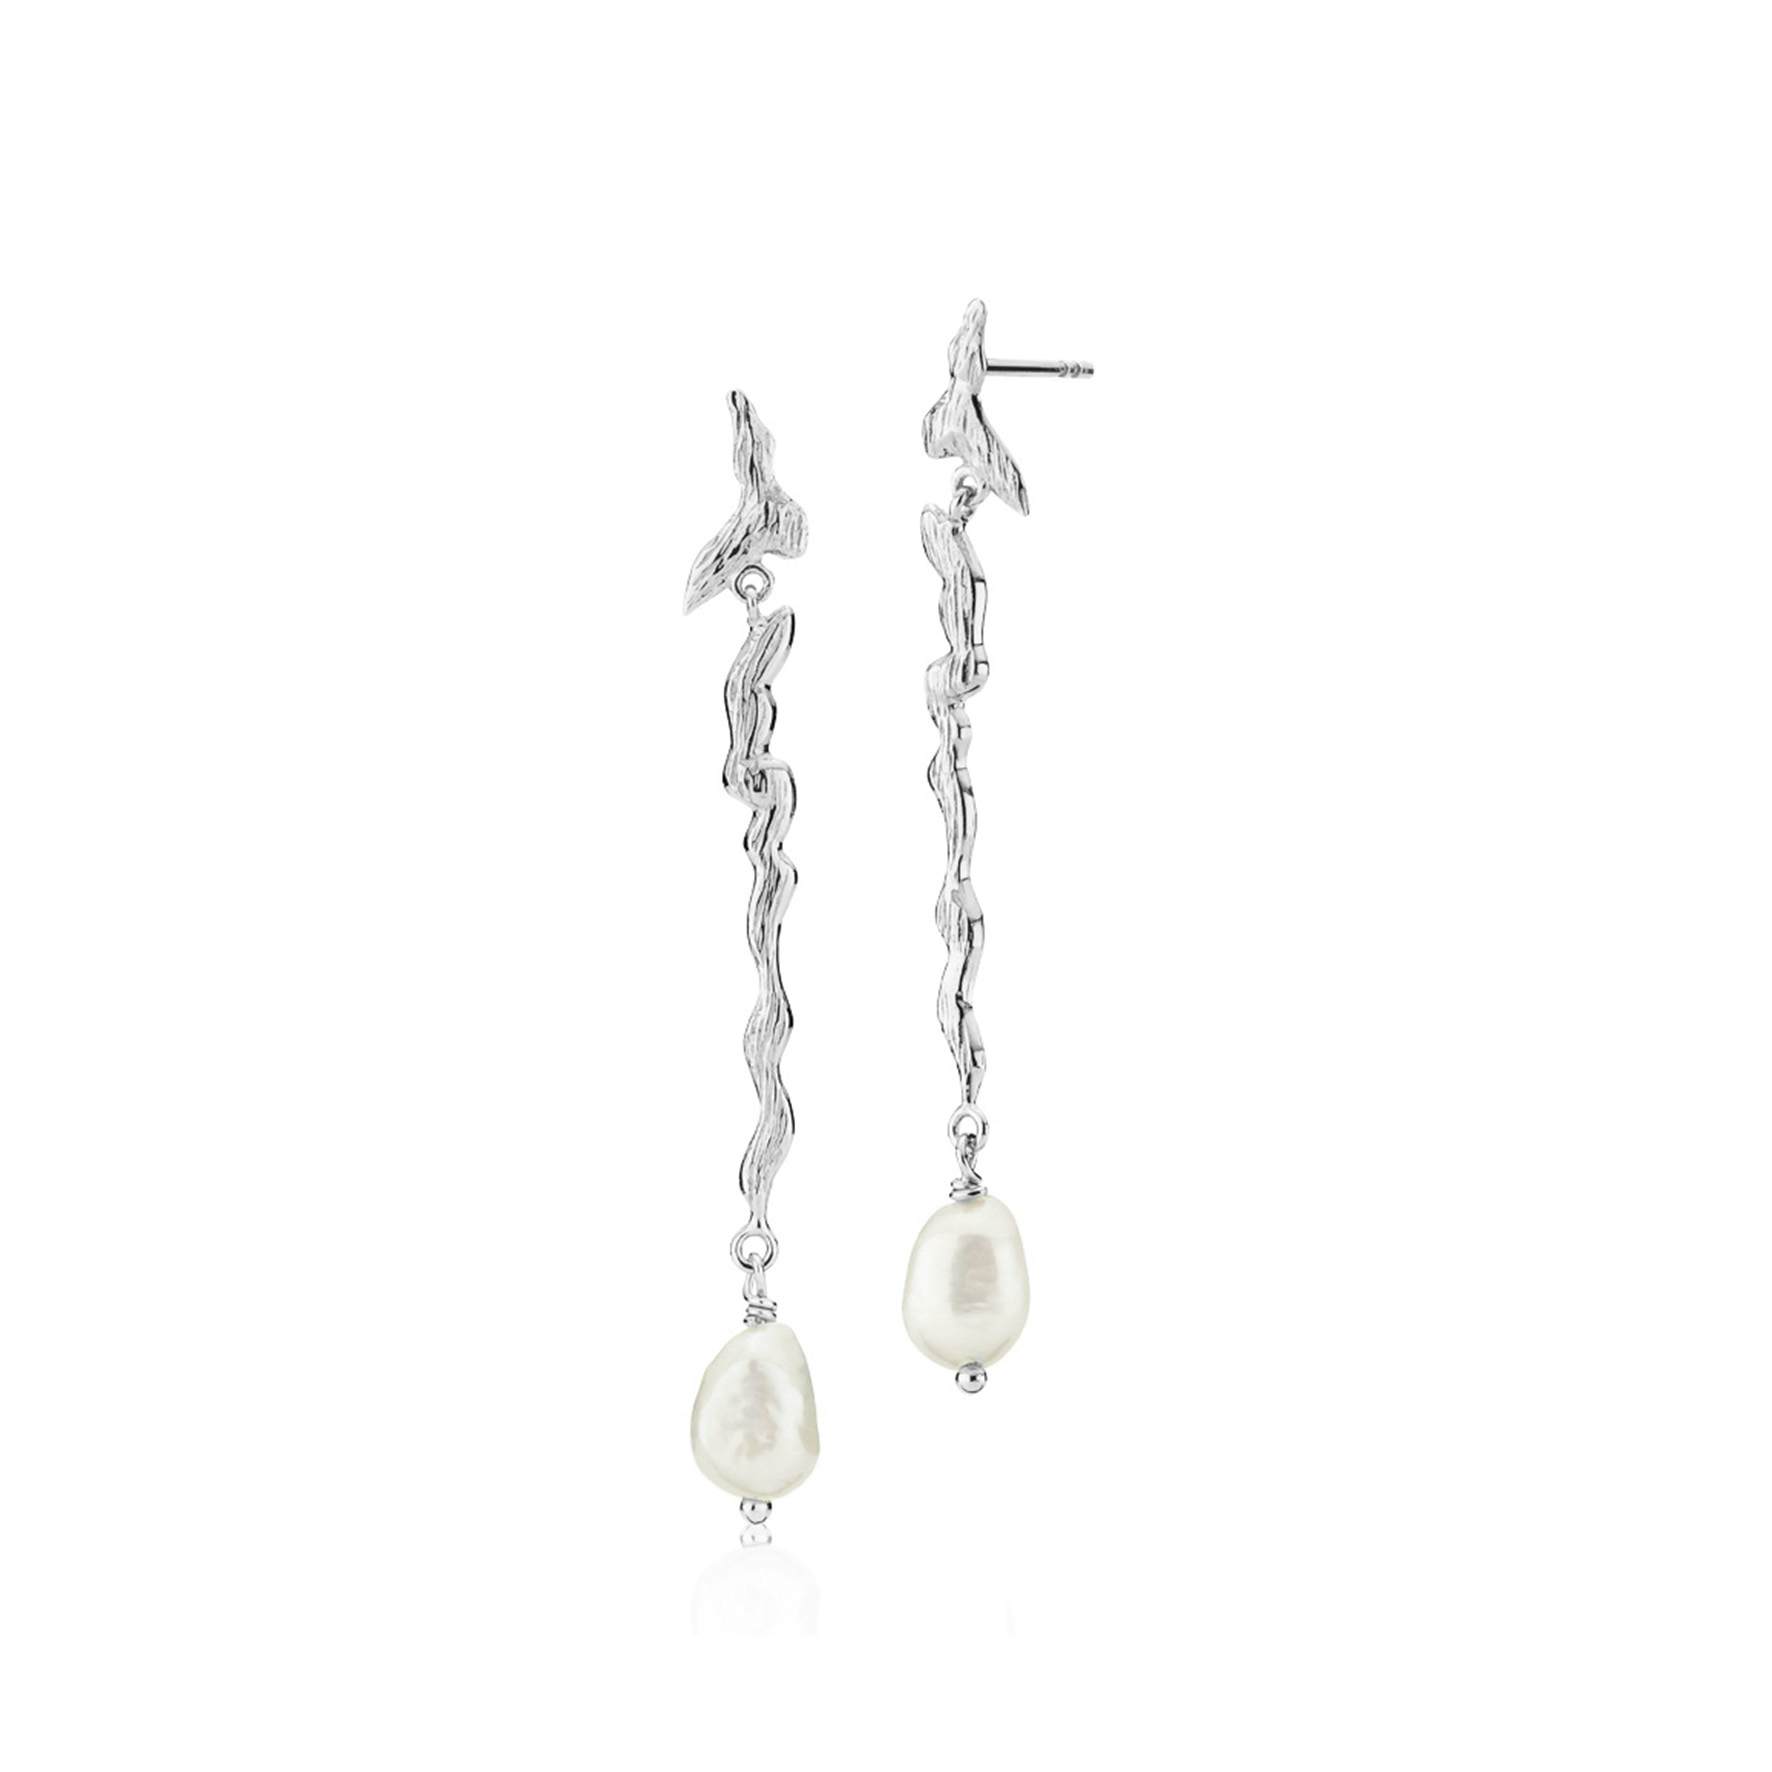 Fairy Long Earrings von Izabel Camille in Silber Sterling 925|Freshwater Pearl